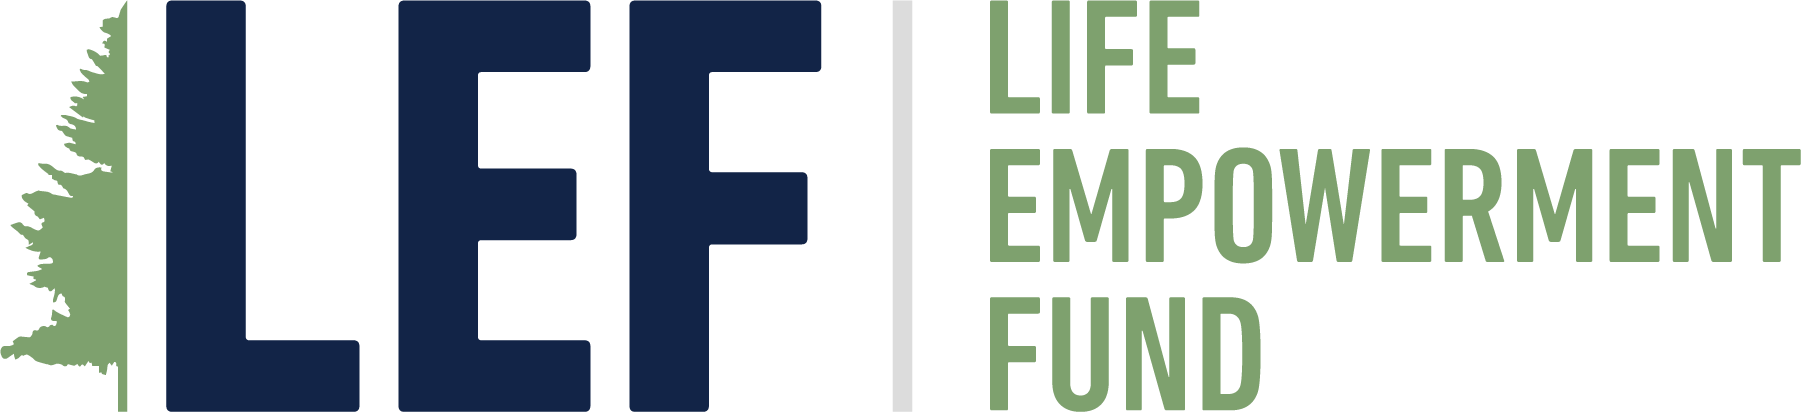 LEF | Life Empowerment Fund